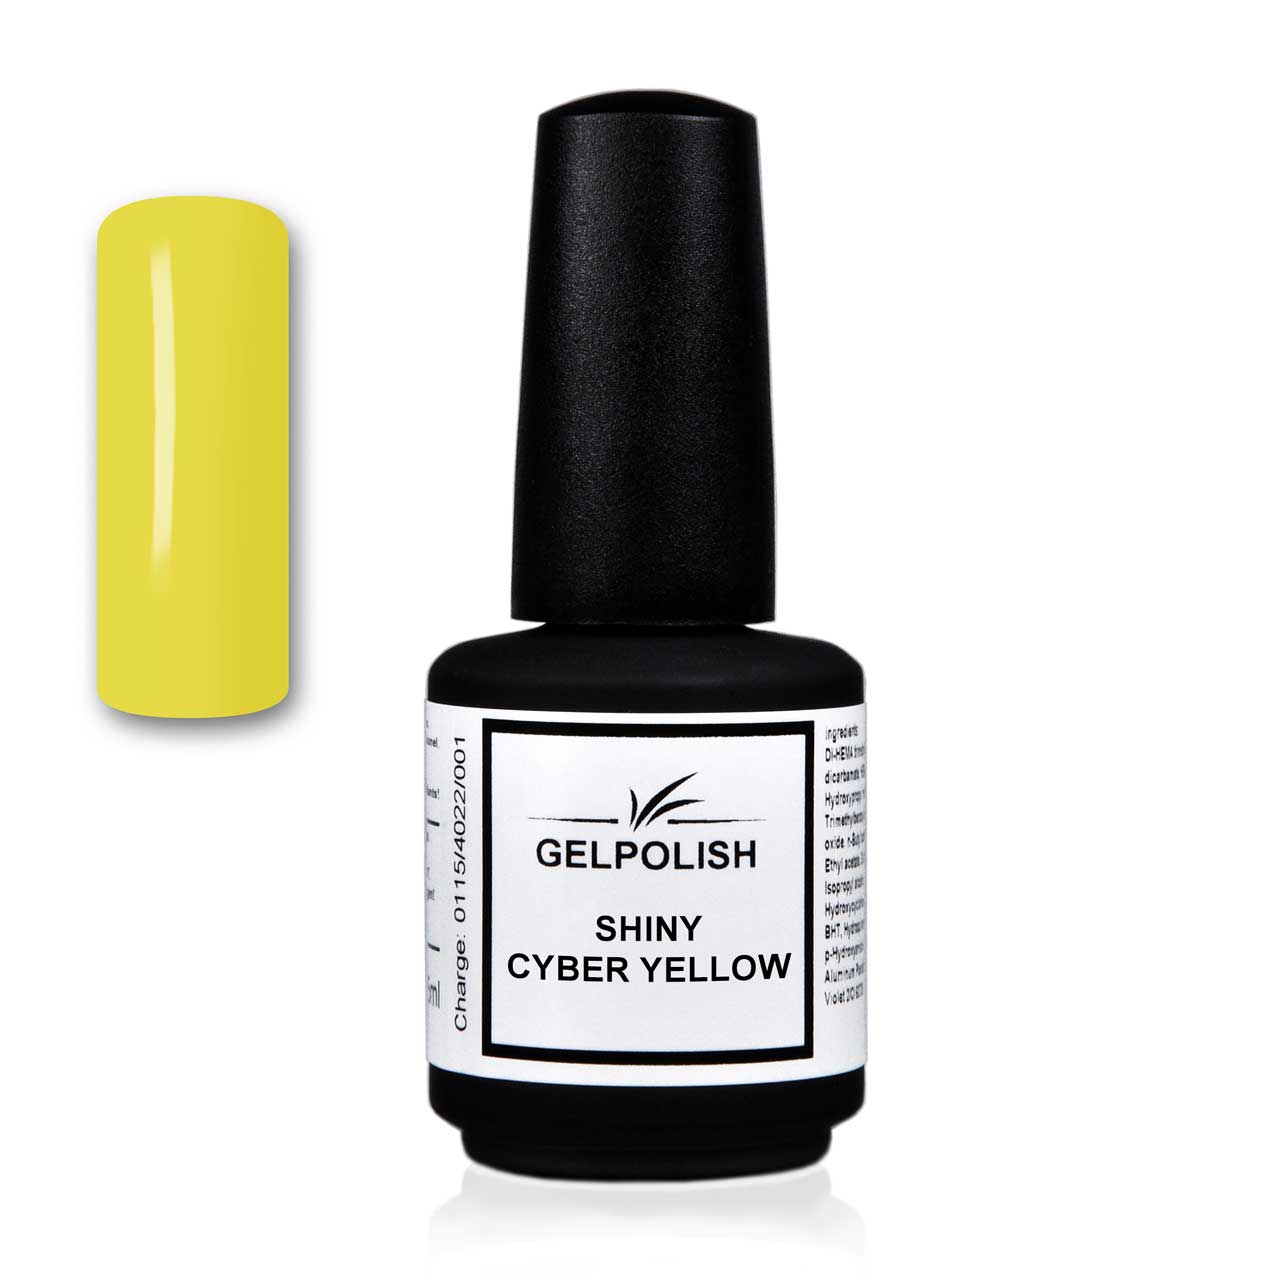 Gelpolish VSP Shiny Cyber Yellow